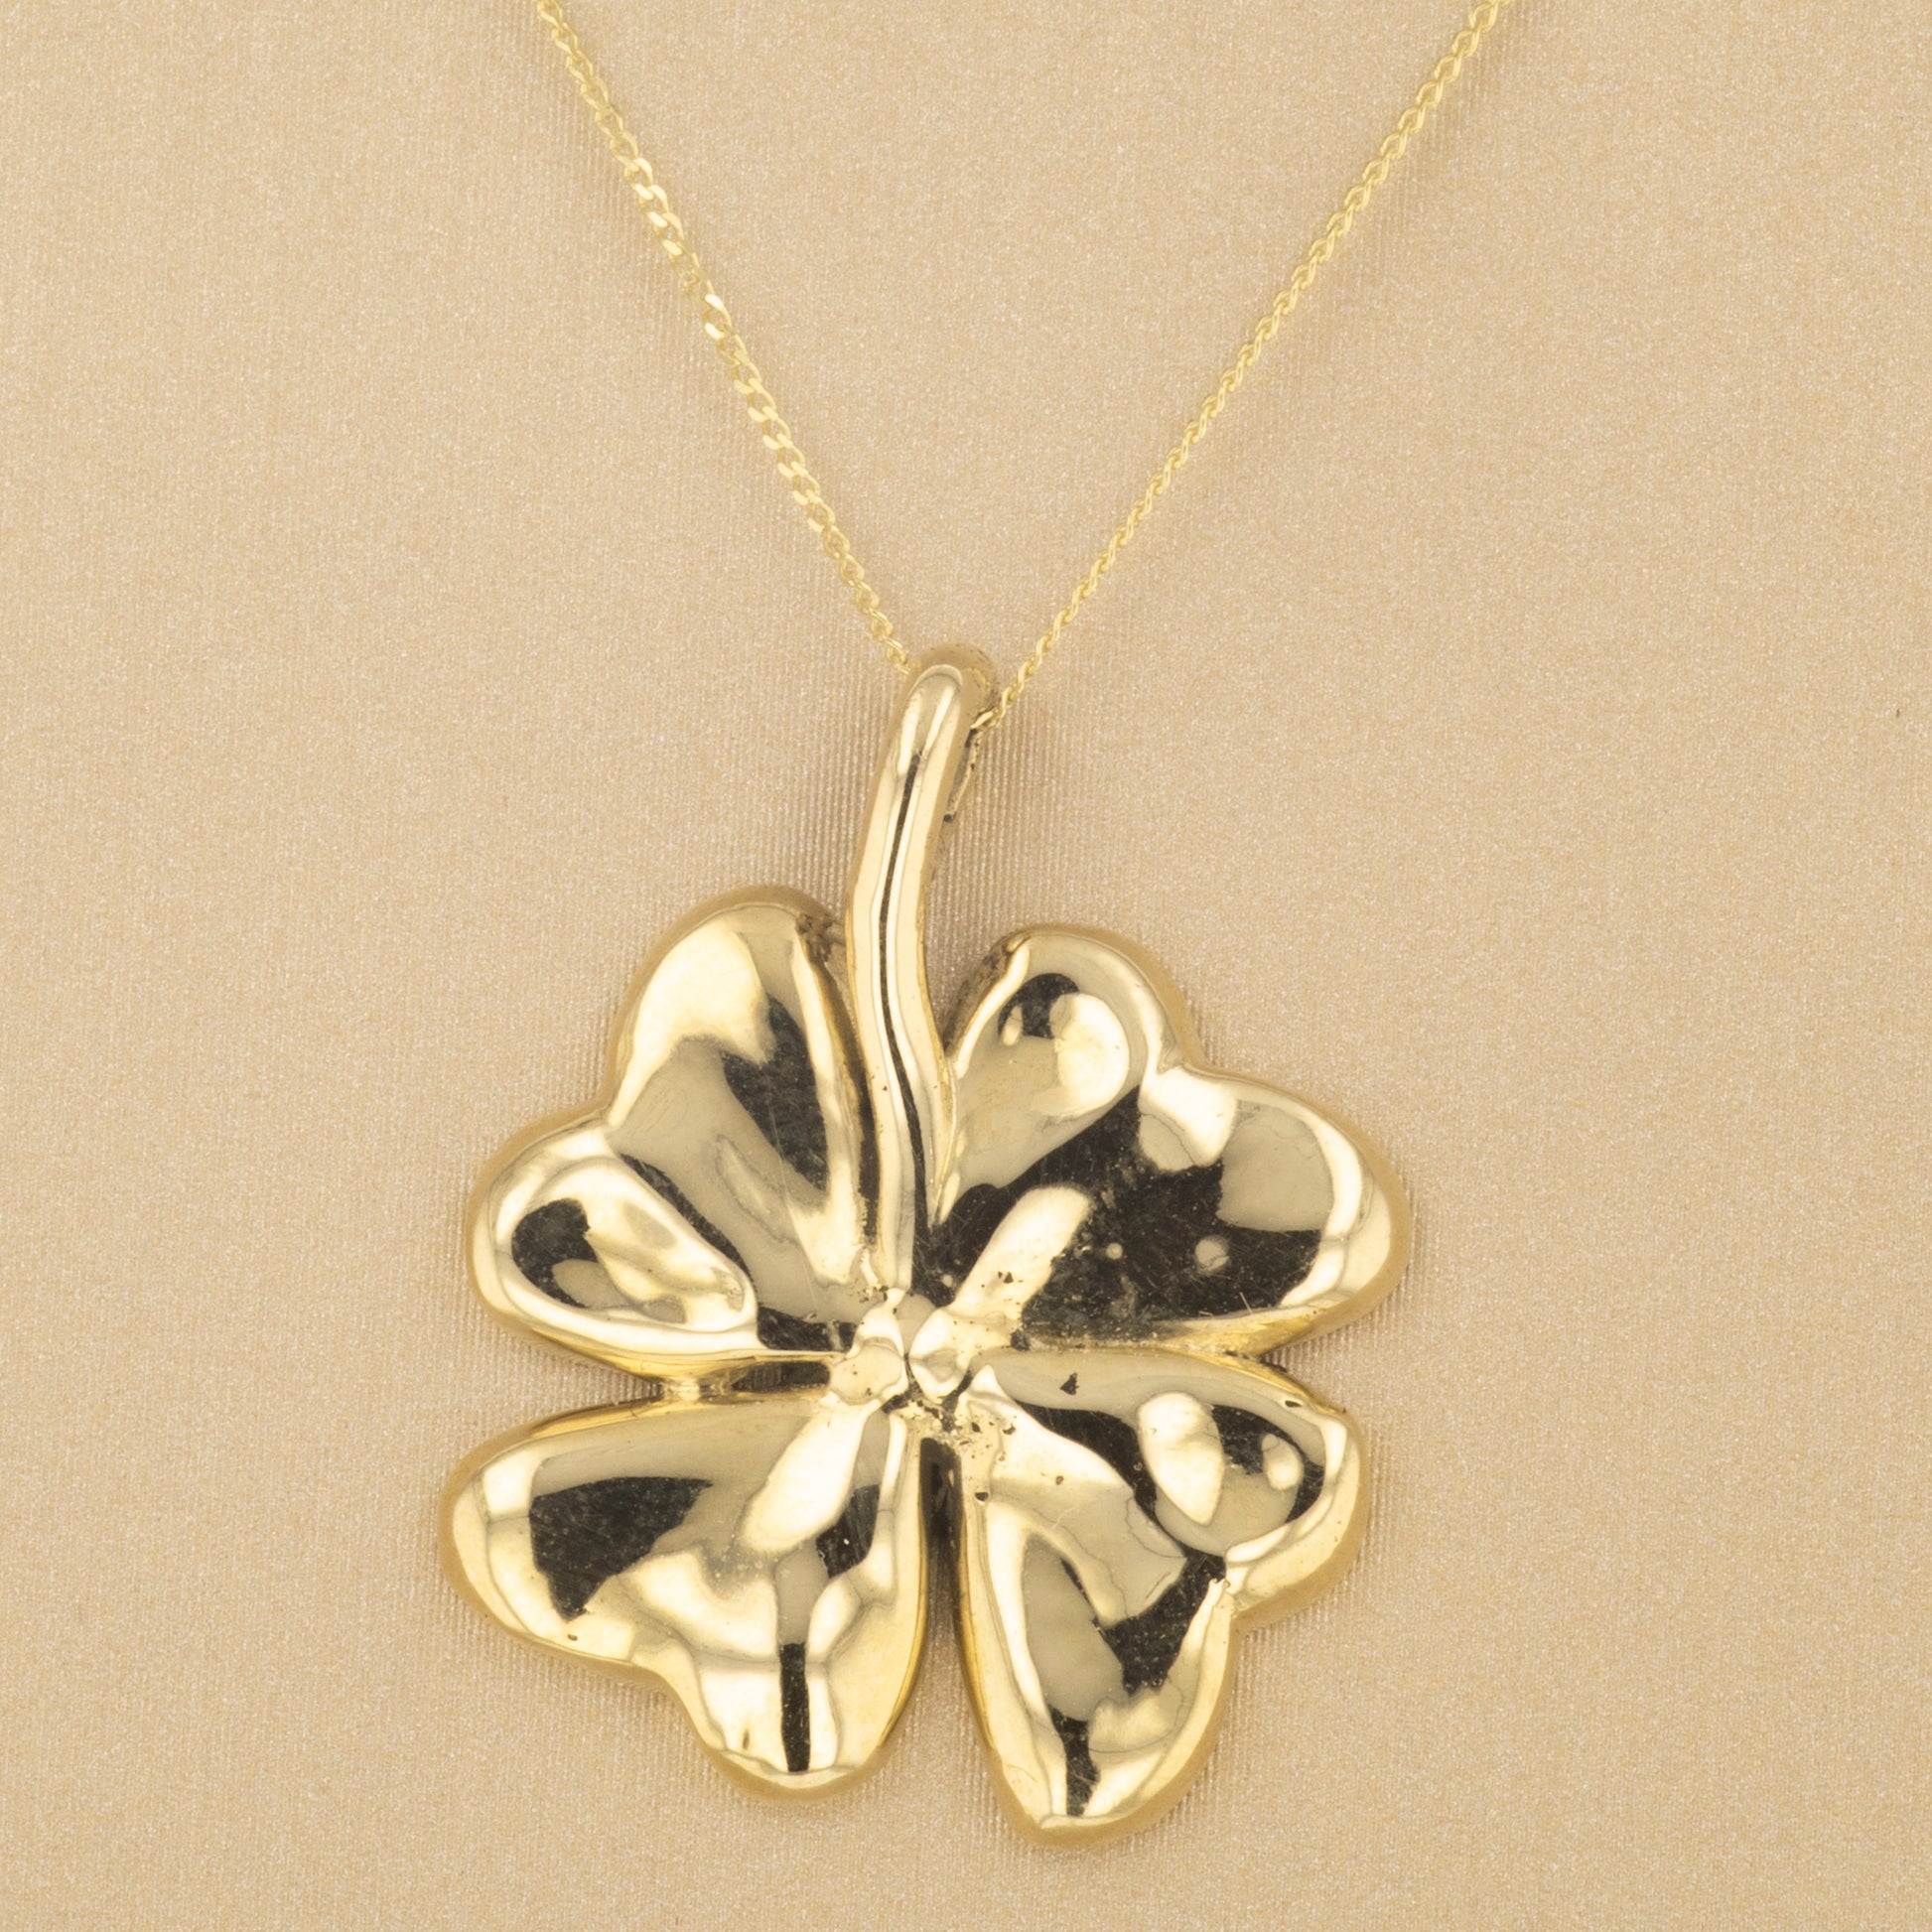 Irish leaf pendant